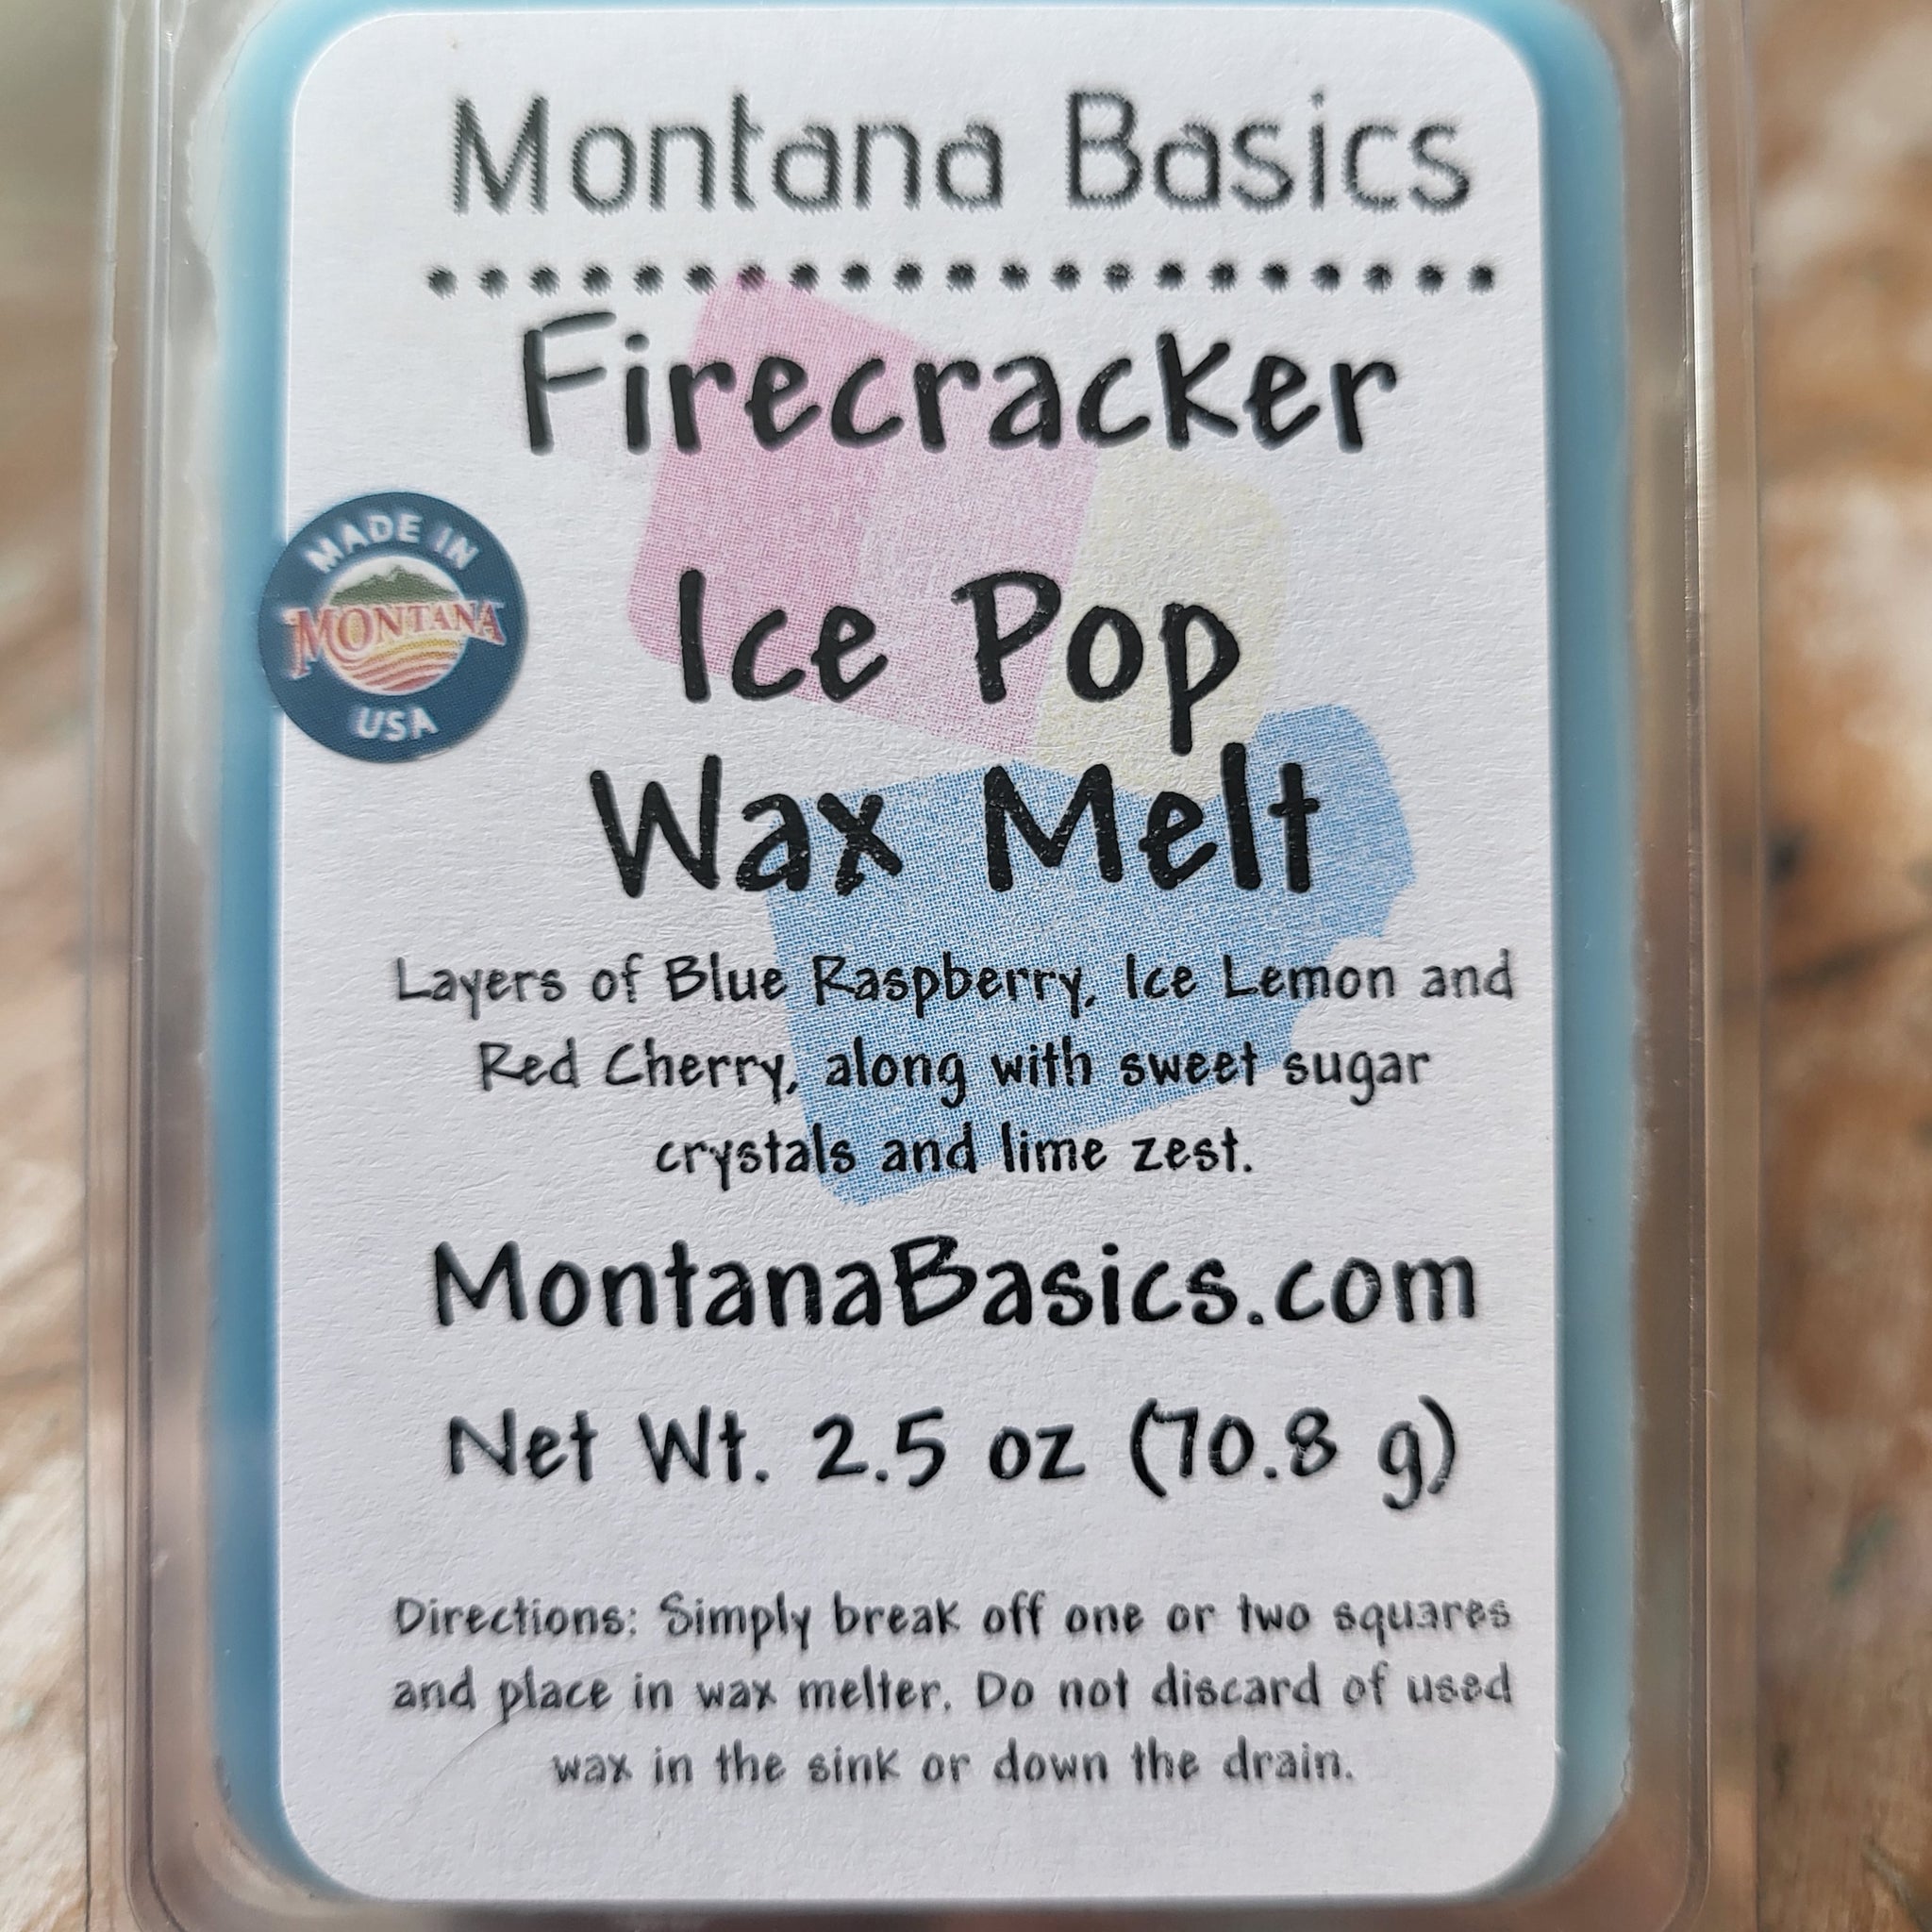 Firecracker Ice Pop - Soy Wax Melt